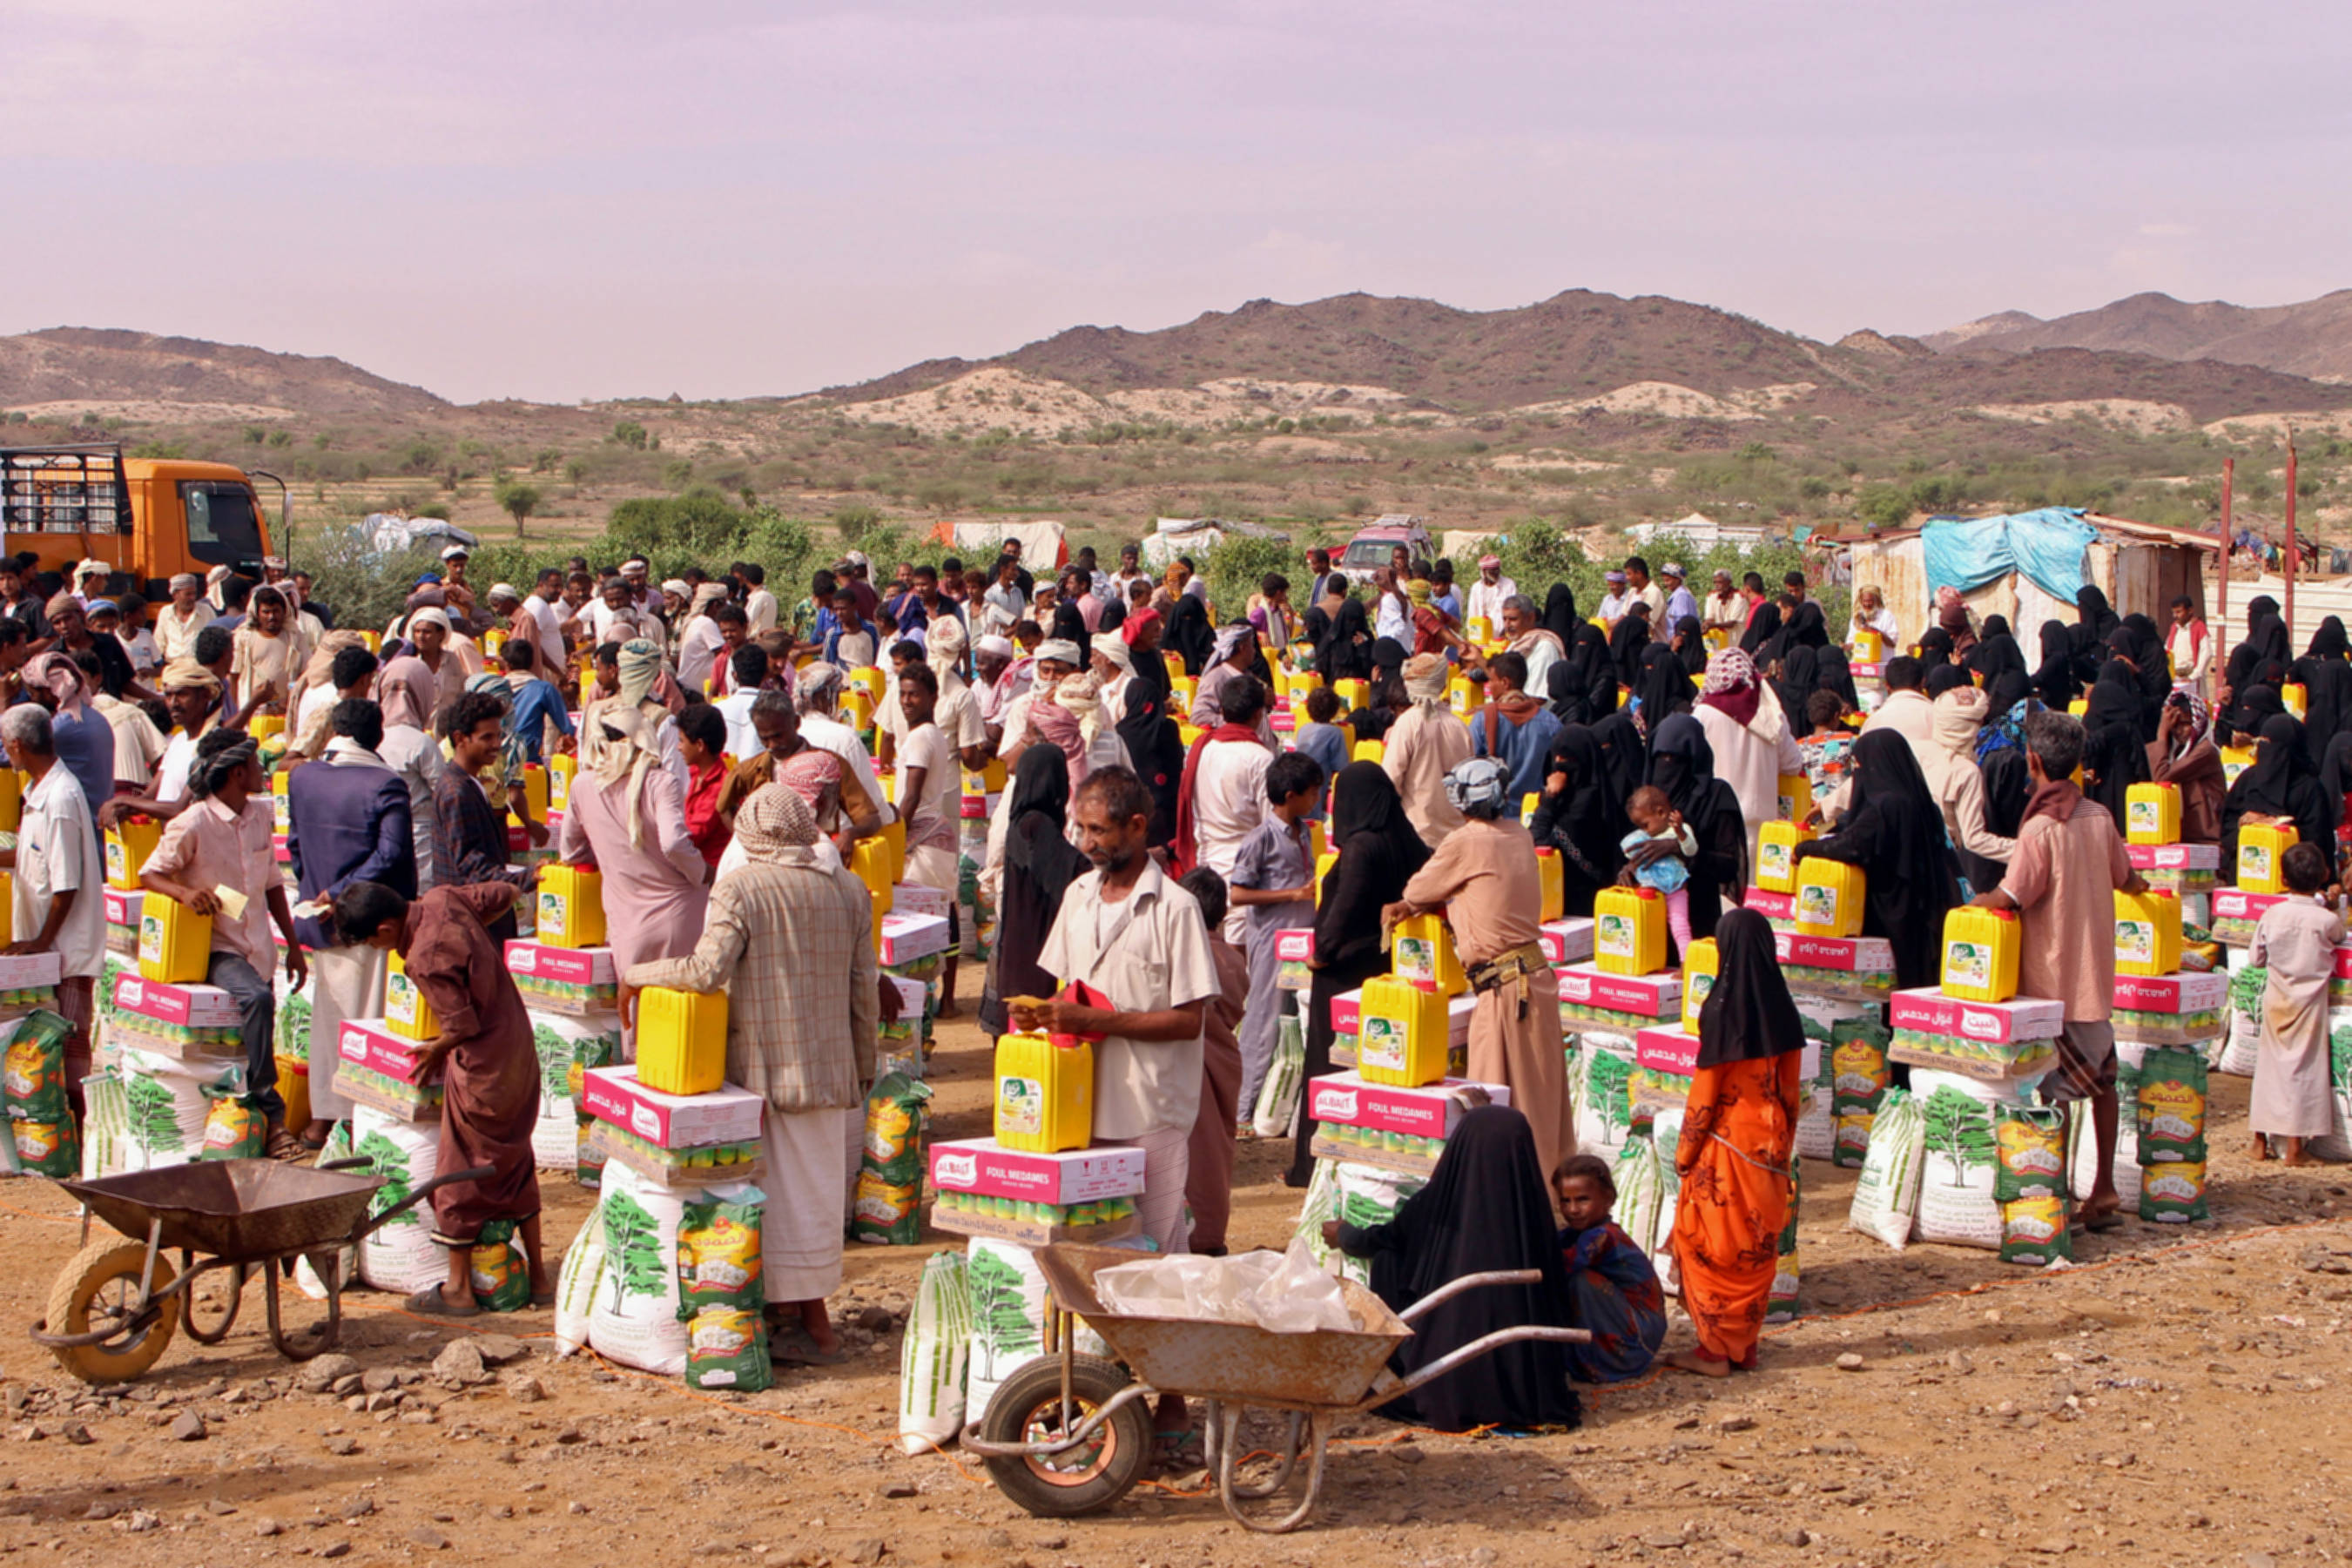 Internally displaced Yemeni receiving aid in Hajjah